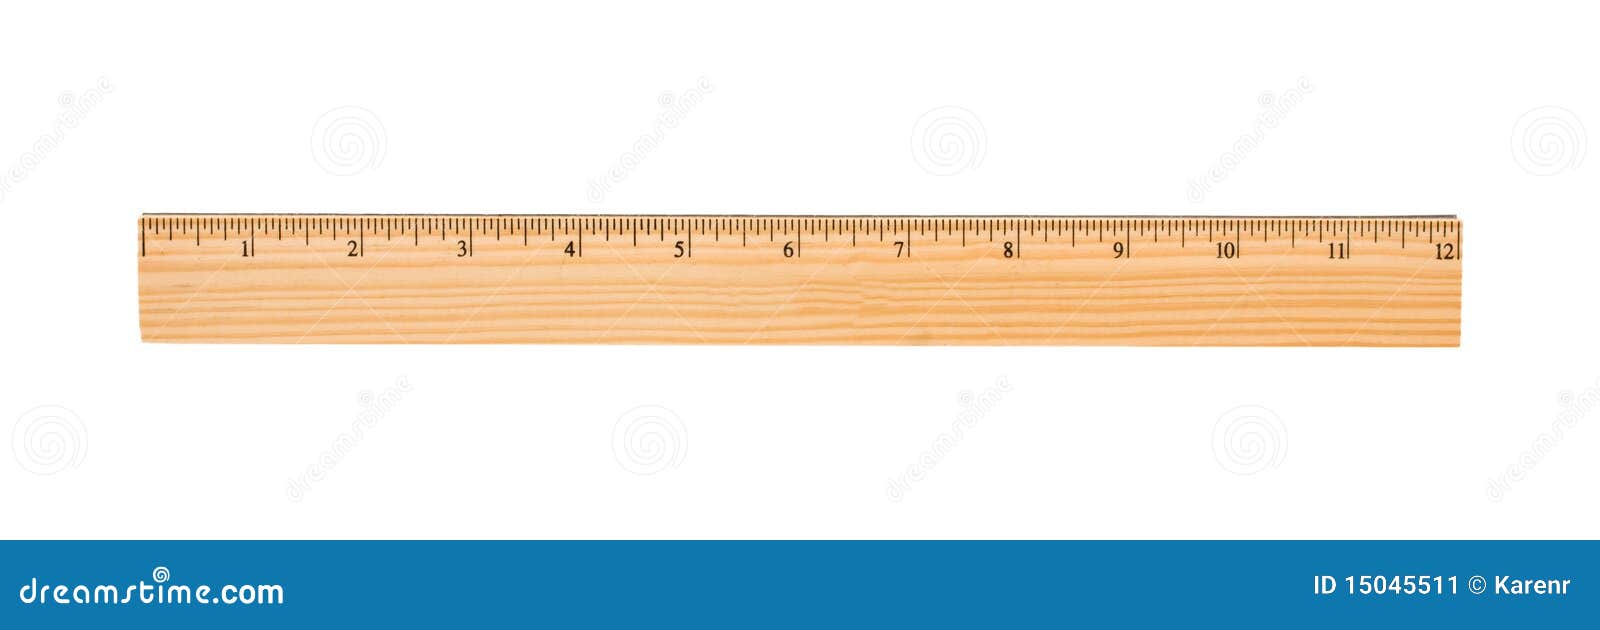 Wooden rulers stock illustration. Illustration of marker - 11564704